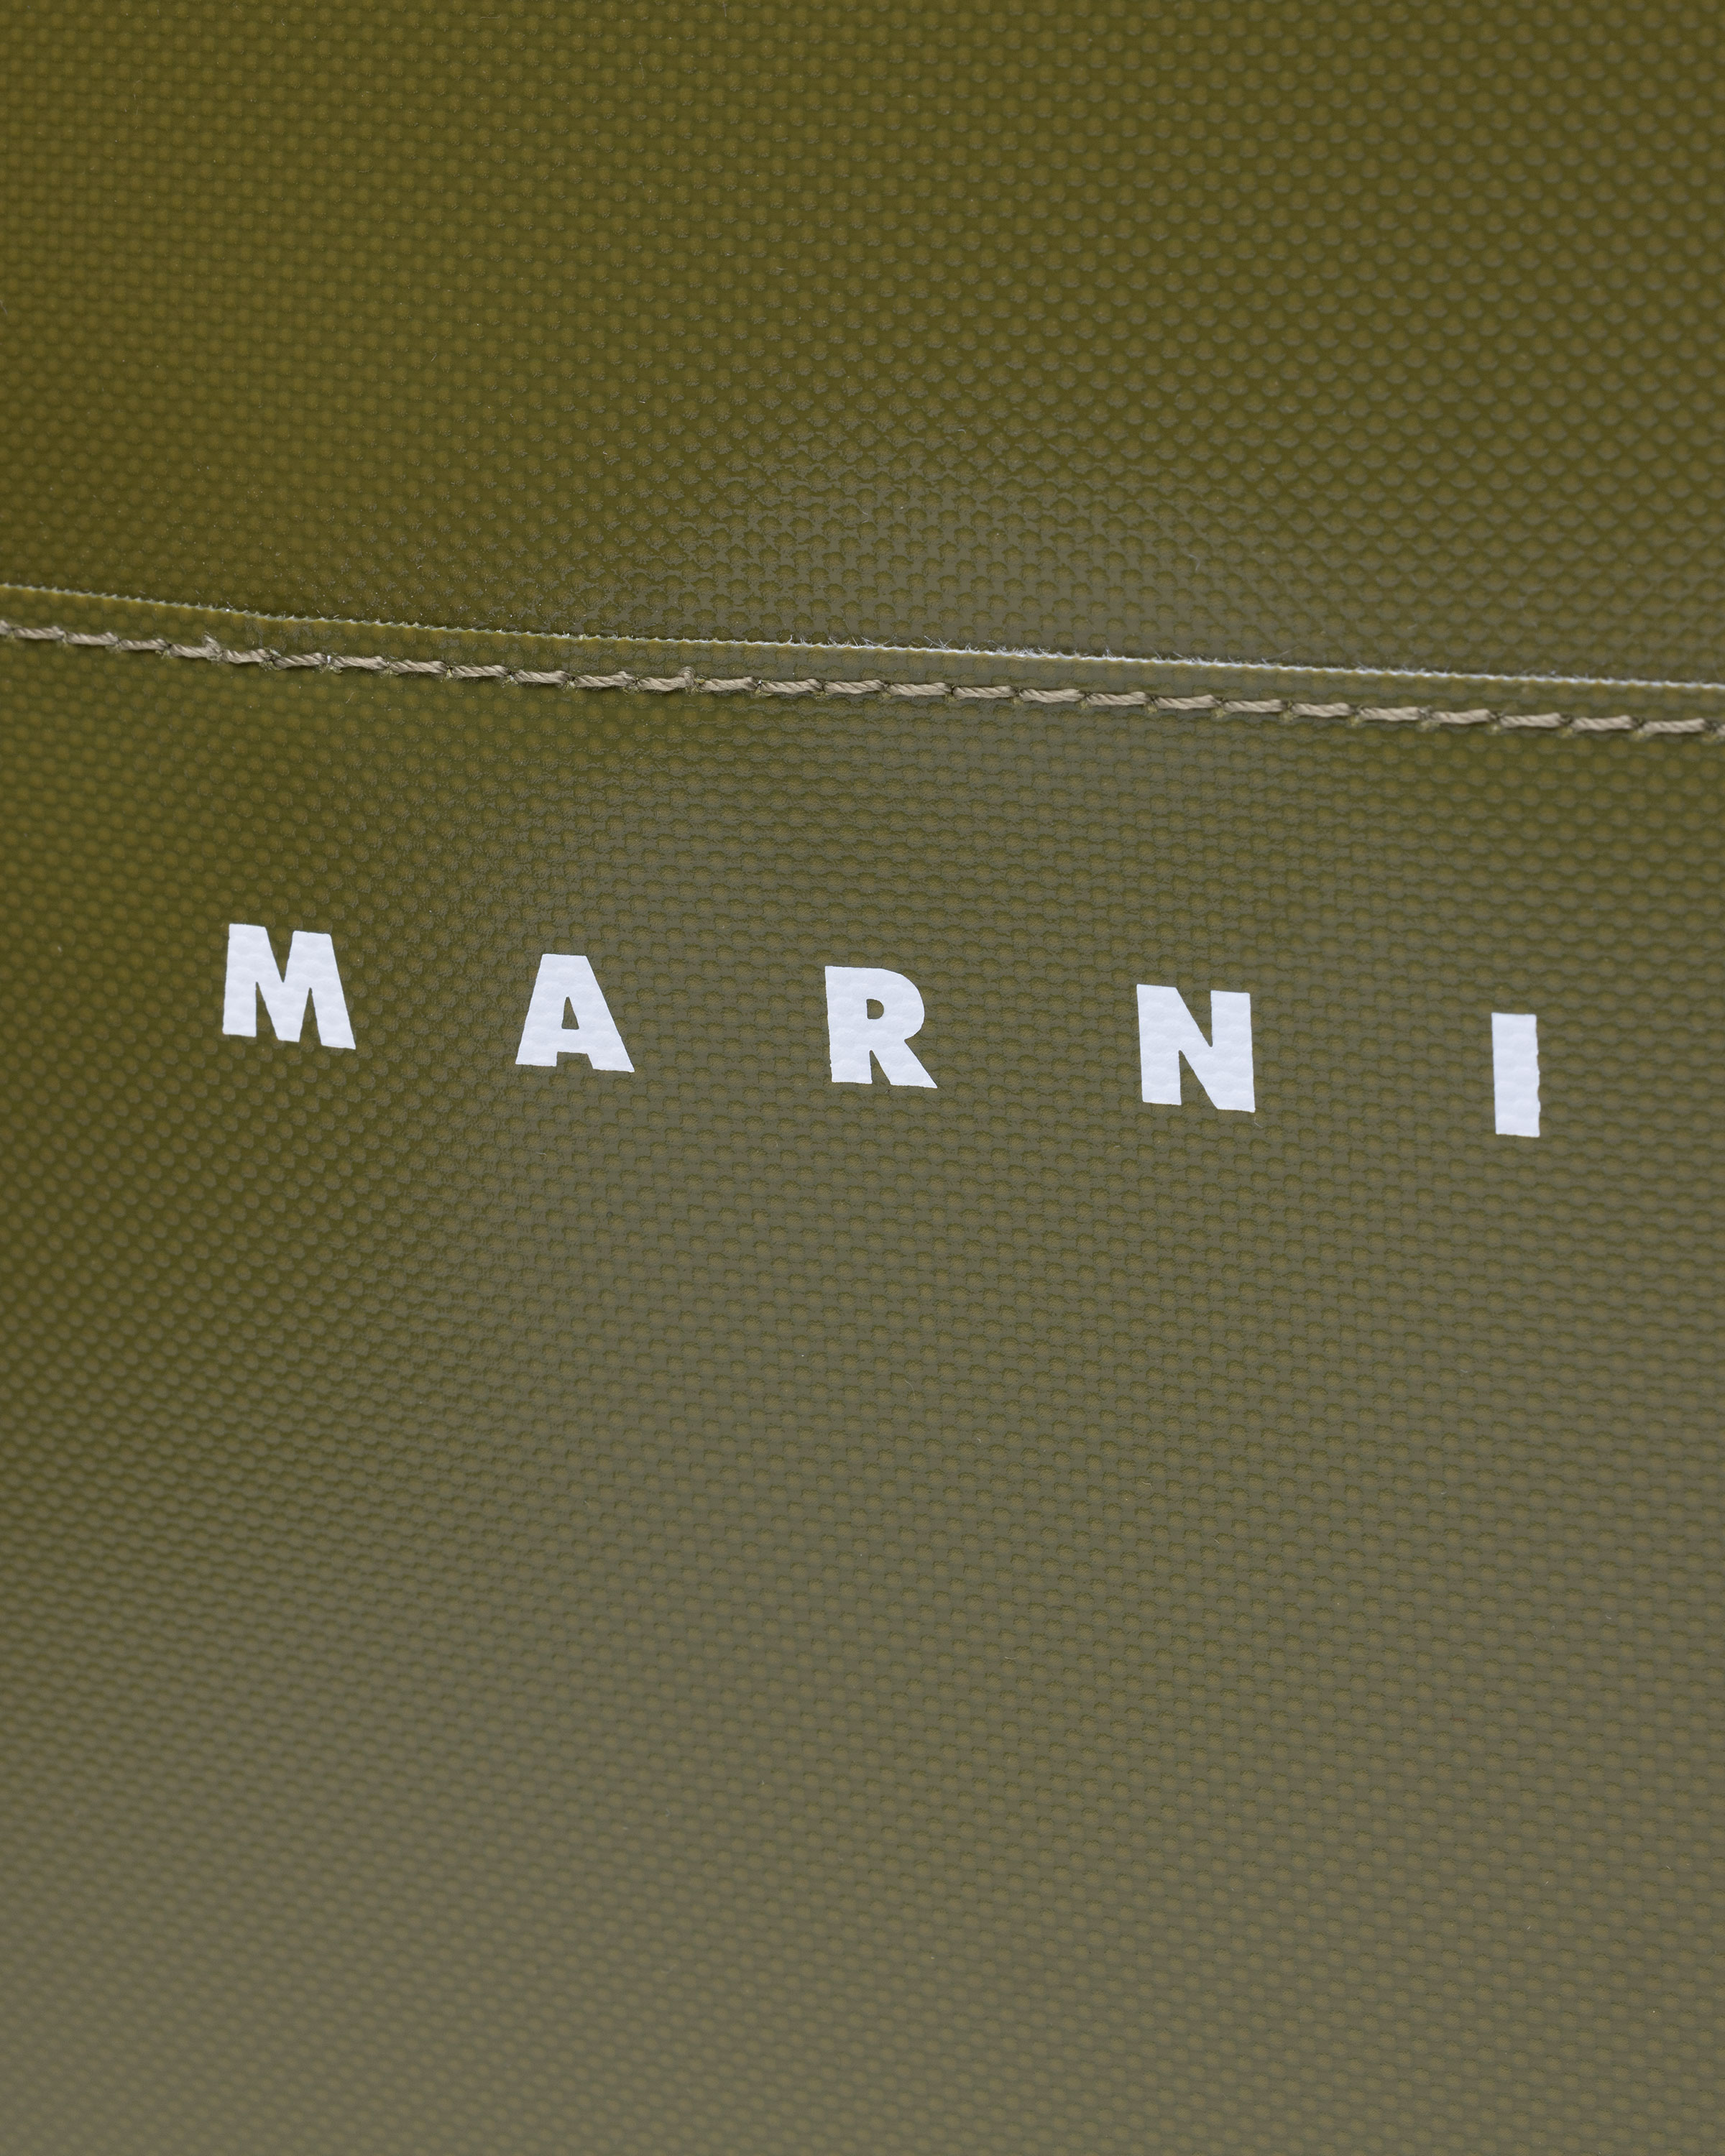 Marni - Tote Bag Olive Green - Accessories - Green - Image 6